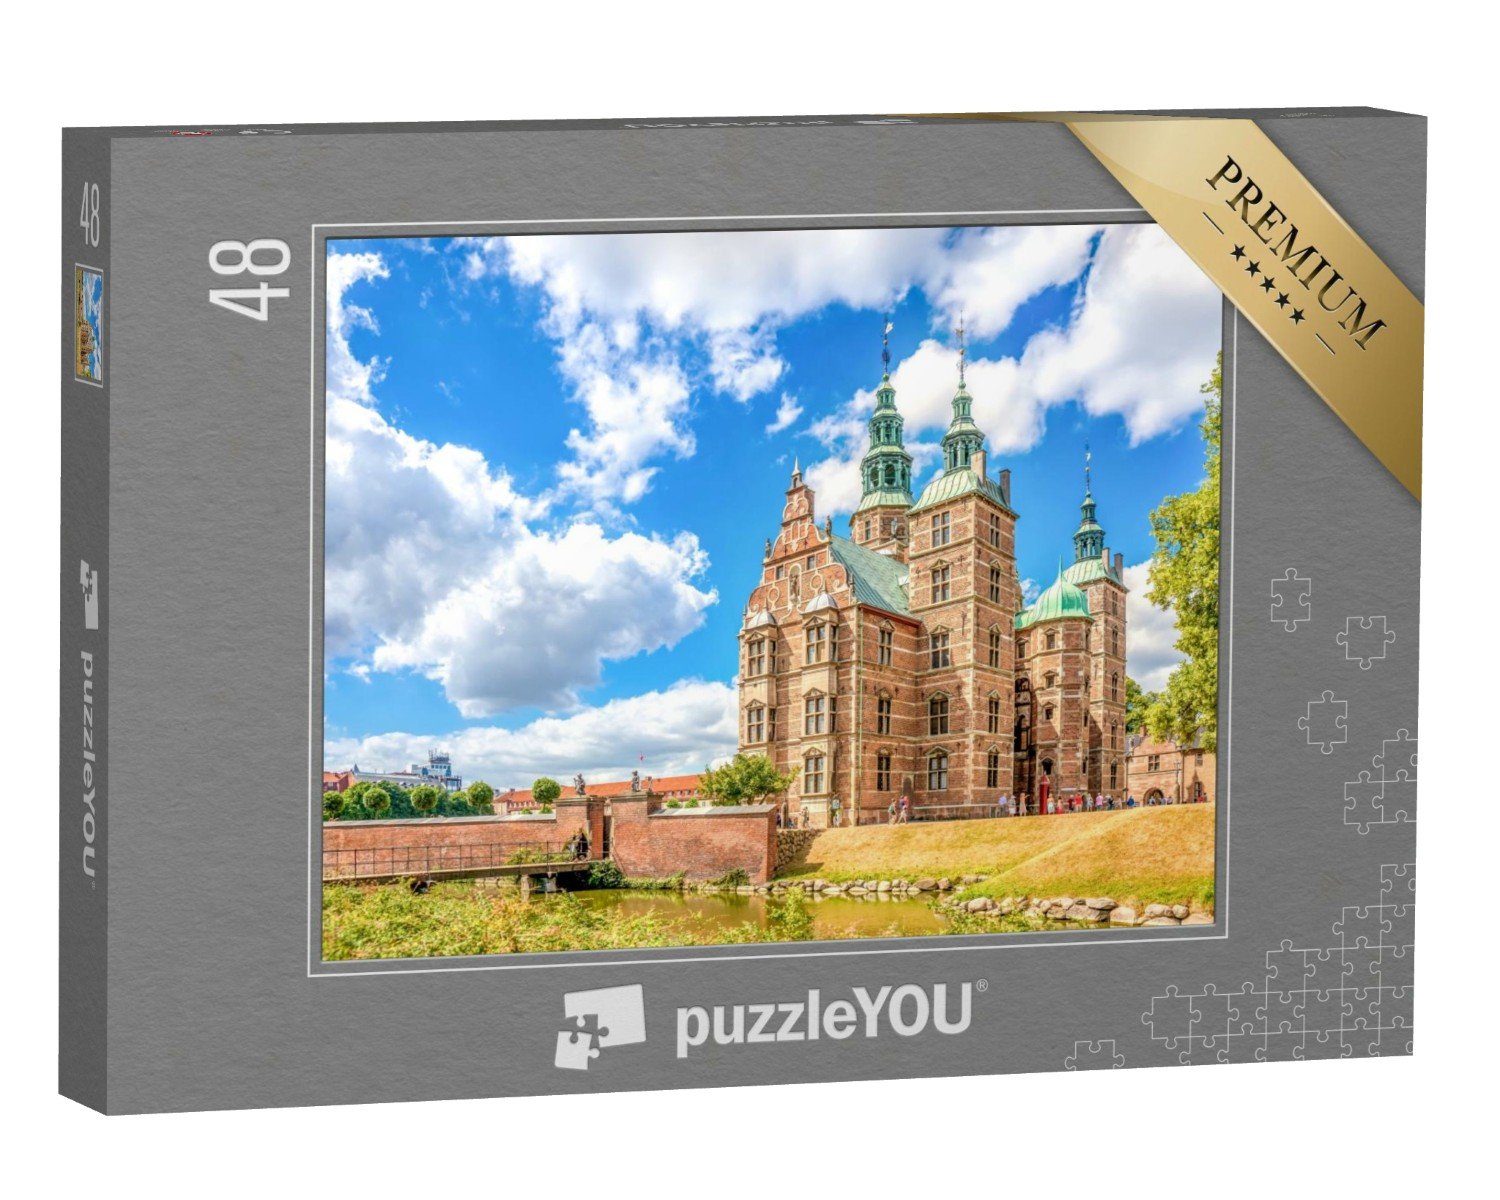 puzzleYOU Puzzle Rosenborg in Kopenhagen, der dänischen Hauptstadt, 48 Puzzleteile, puzzleYOU-Kollektionen Dänemark, Skandinavien